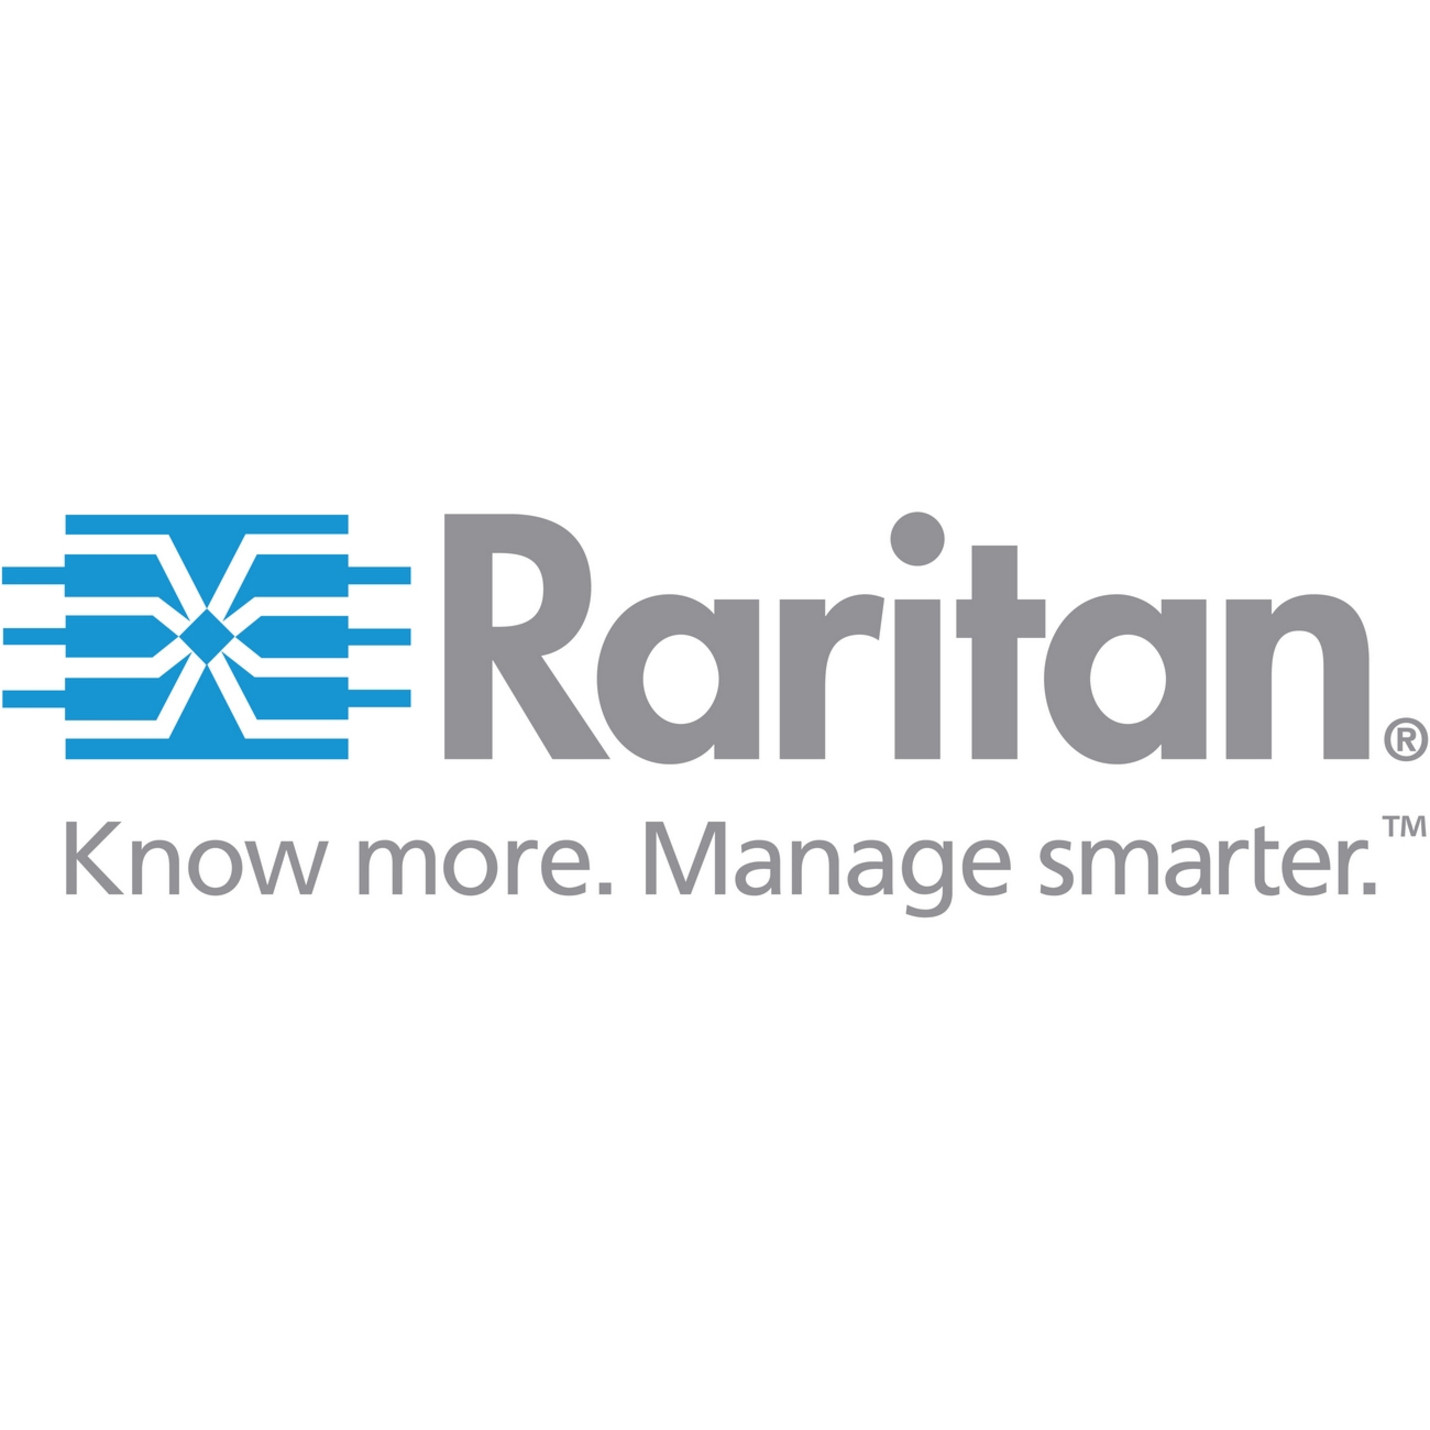 Raritan Computer Guardian Support Services Platinum4 YearService24 HourMaintenancePhysical Service WARCC-E1-256-2